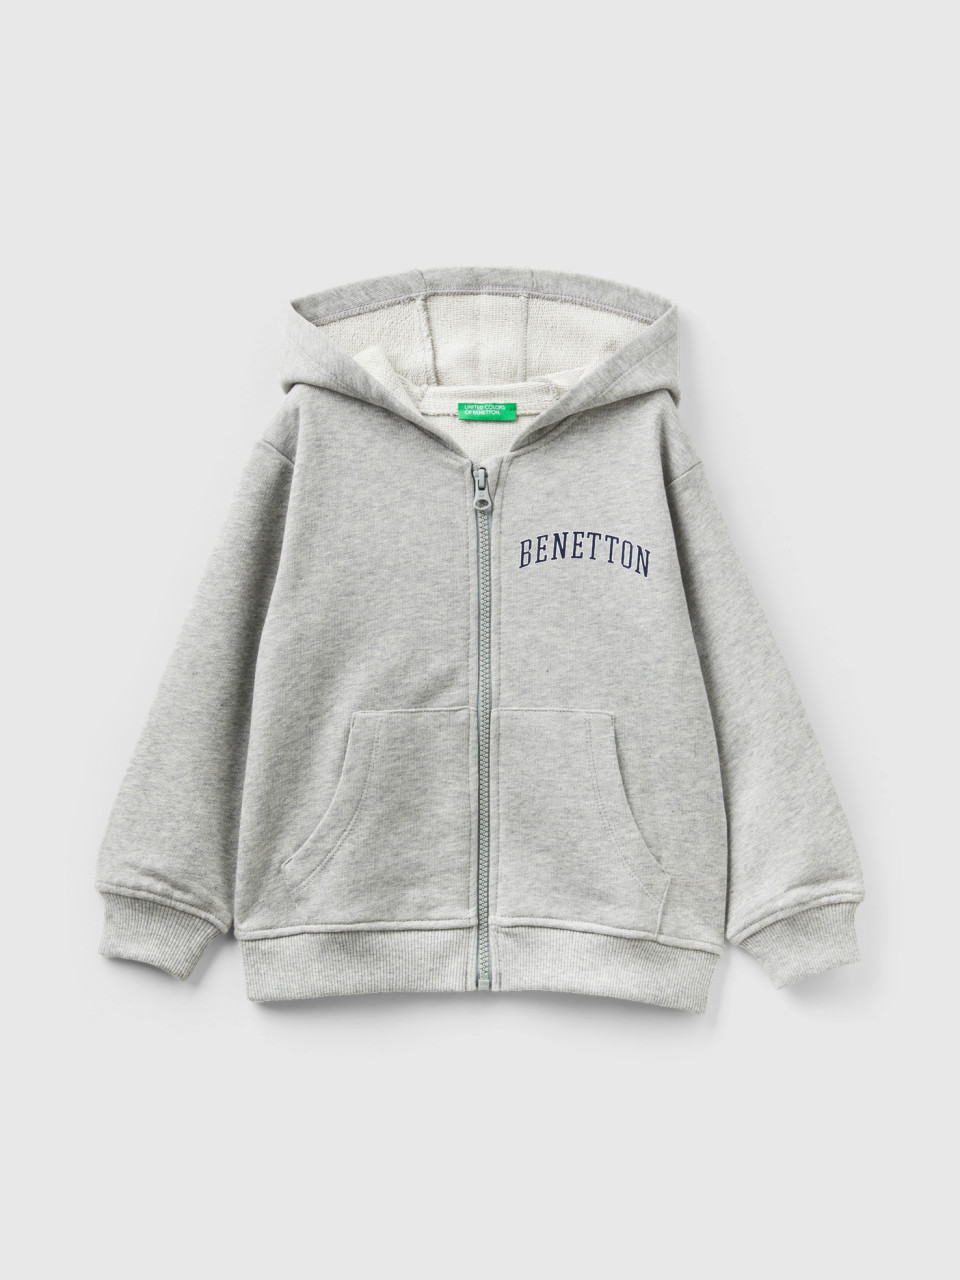 Benetton, Hoodie With Logo, Light Gray, Kids